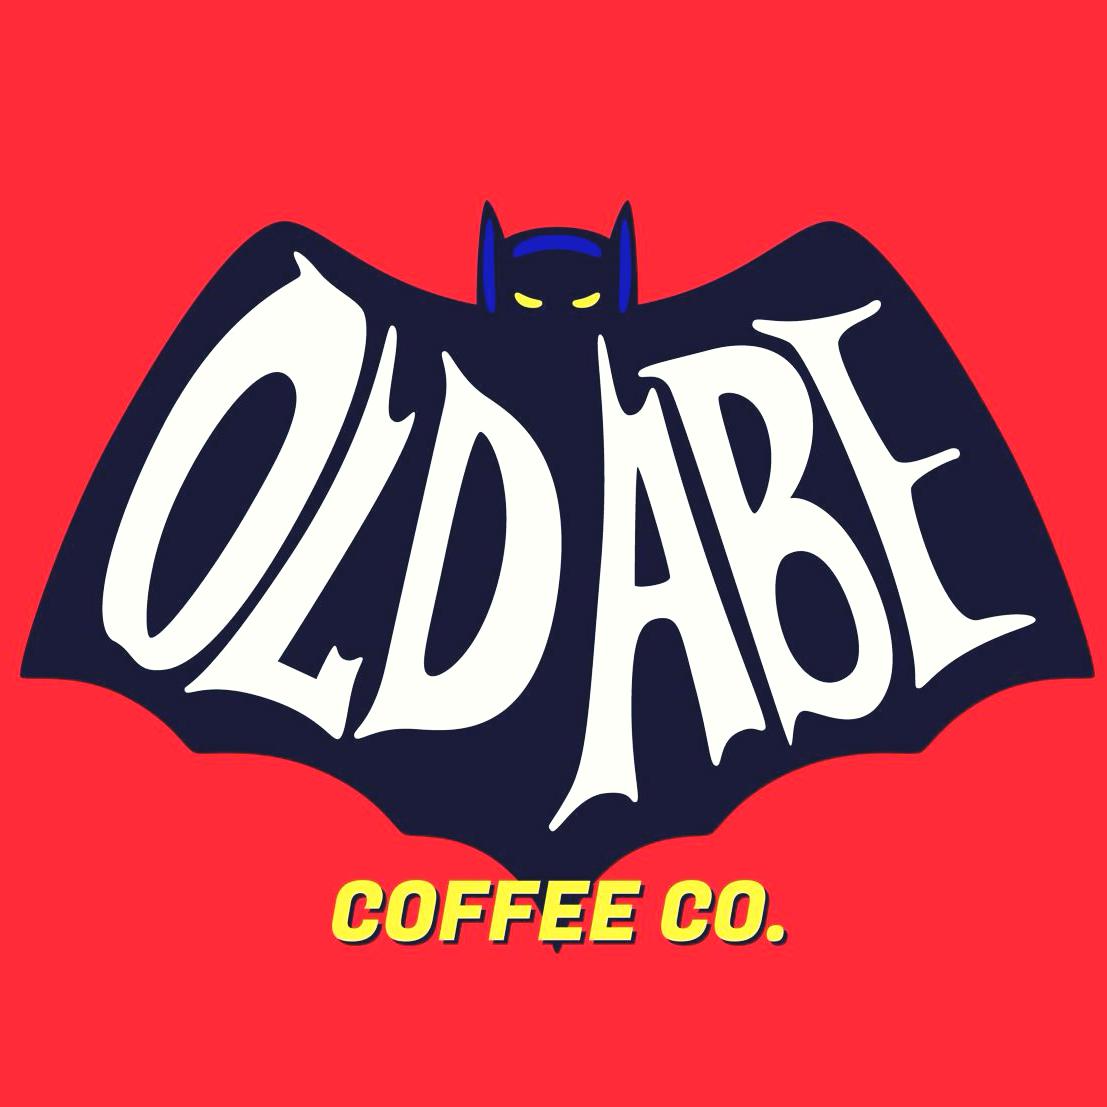 Old Abe & Co.